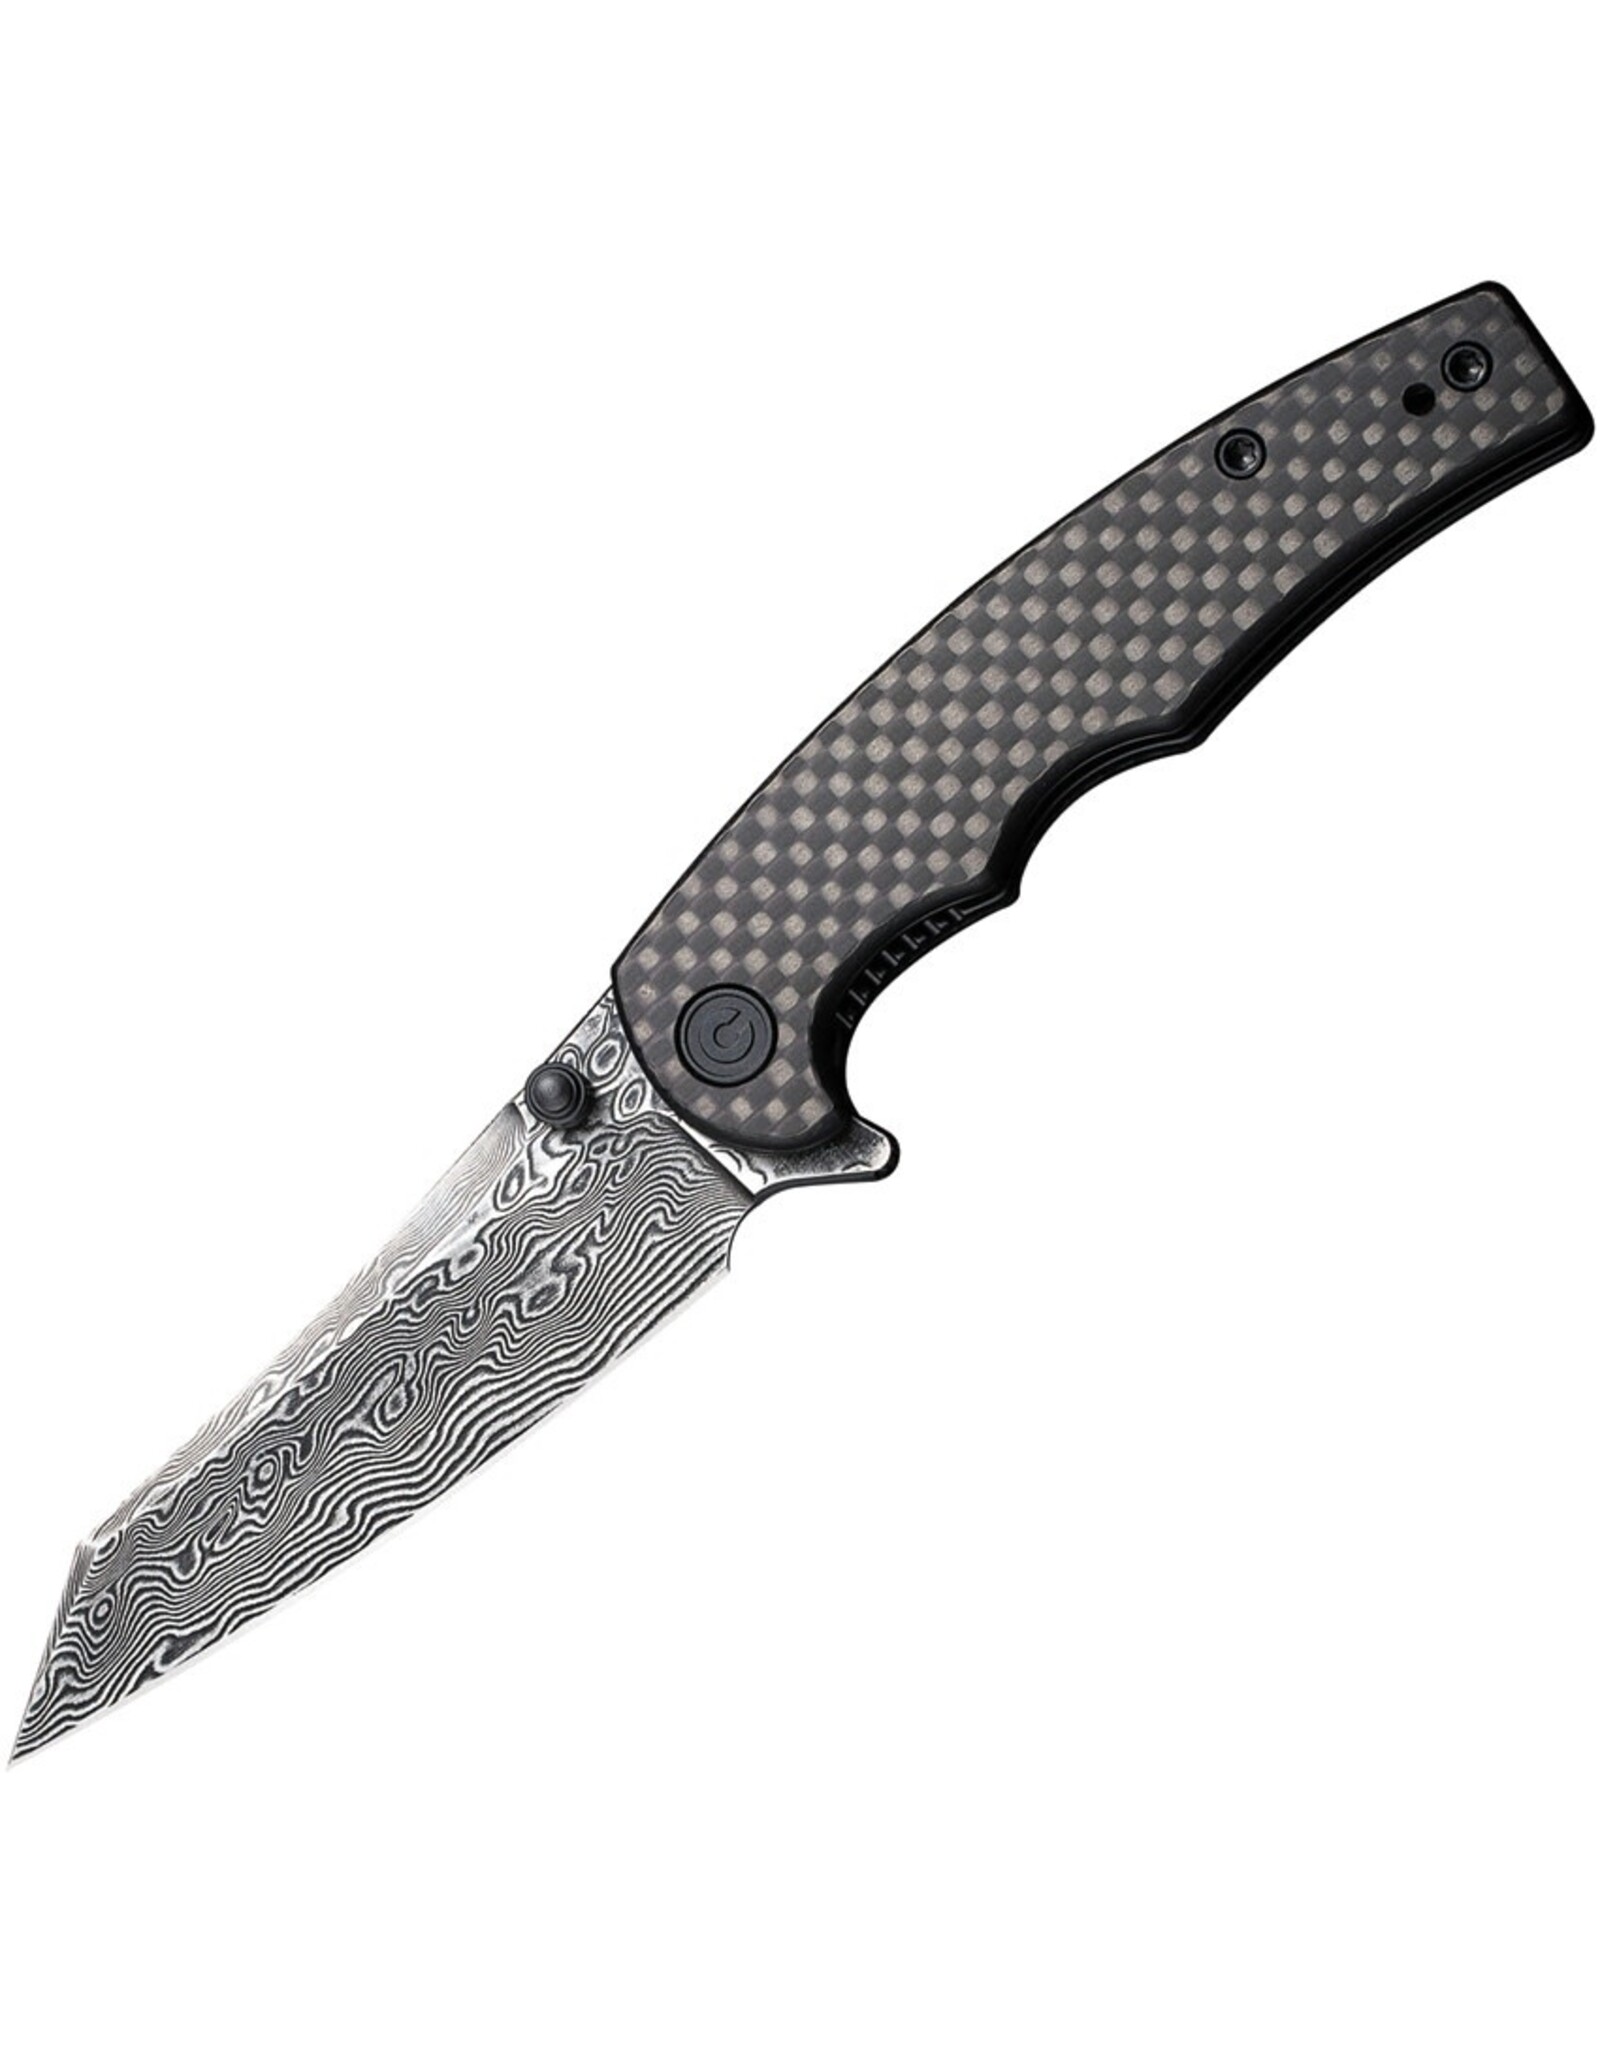 Civivi CIVIVI Knives C21043-DS1 P87 Flipper Knife 2.9" Damascus Reverse Tanto Blade, Black G10 Handles with Twill Carbon Fiber Overlay, Liner Lock